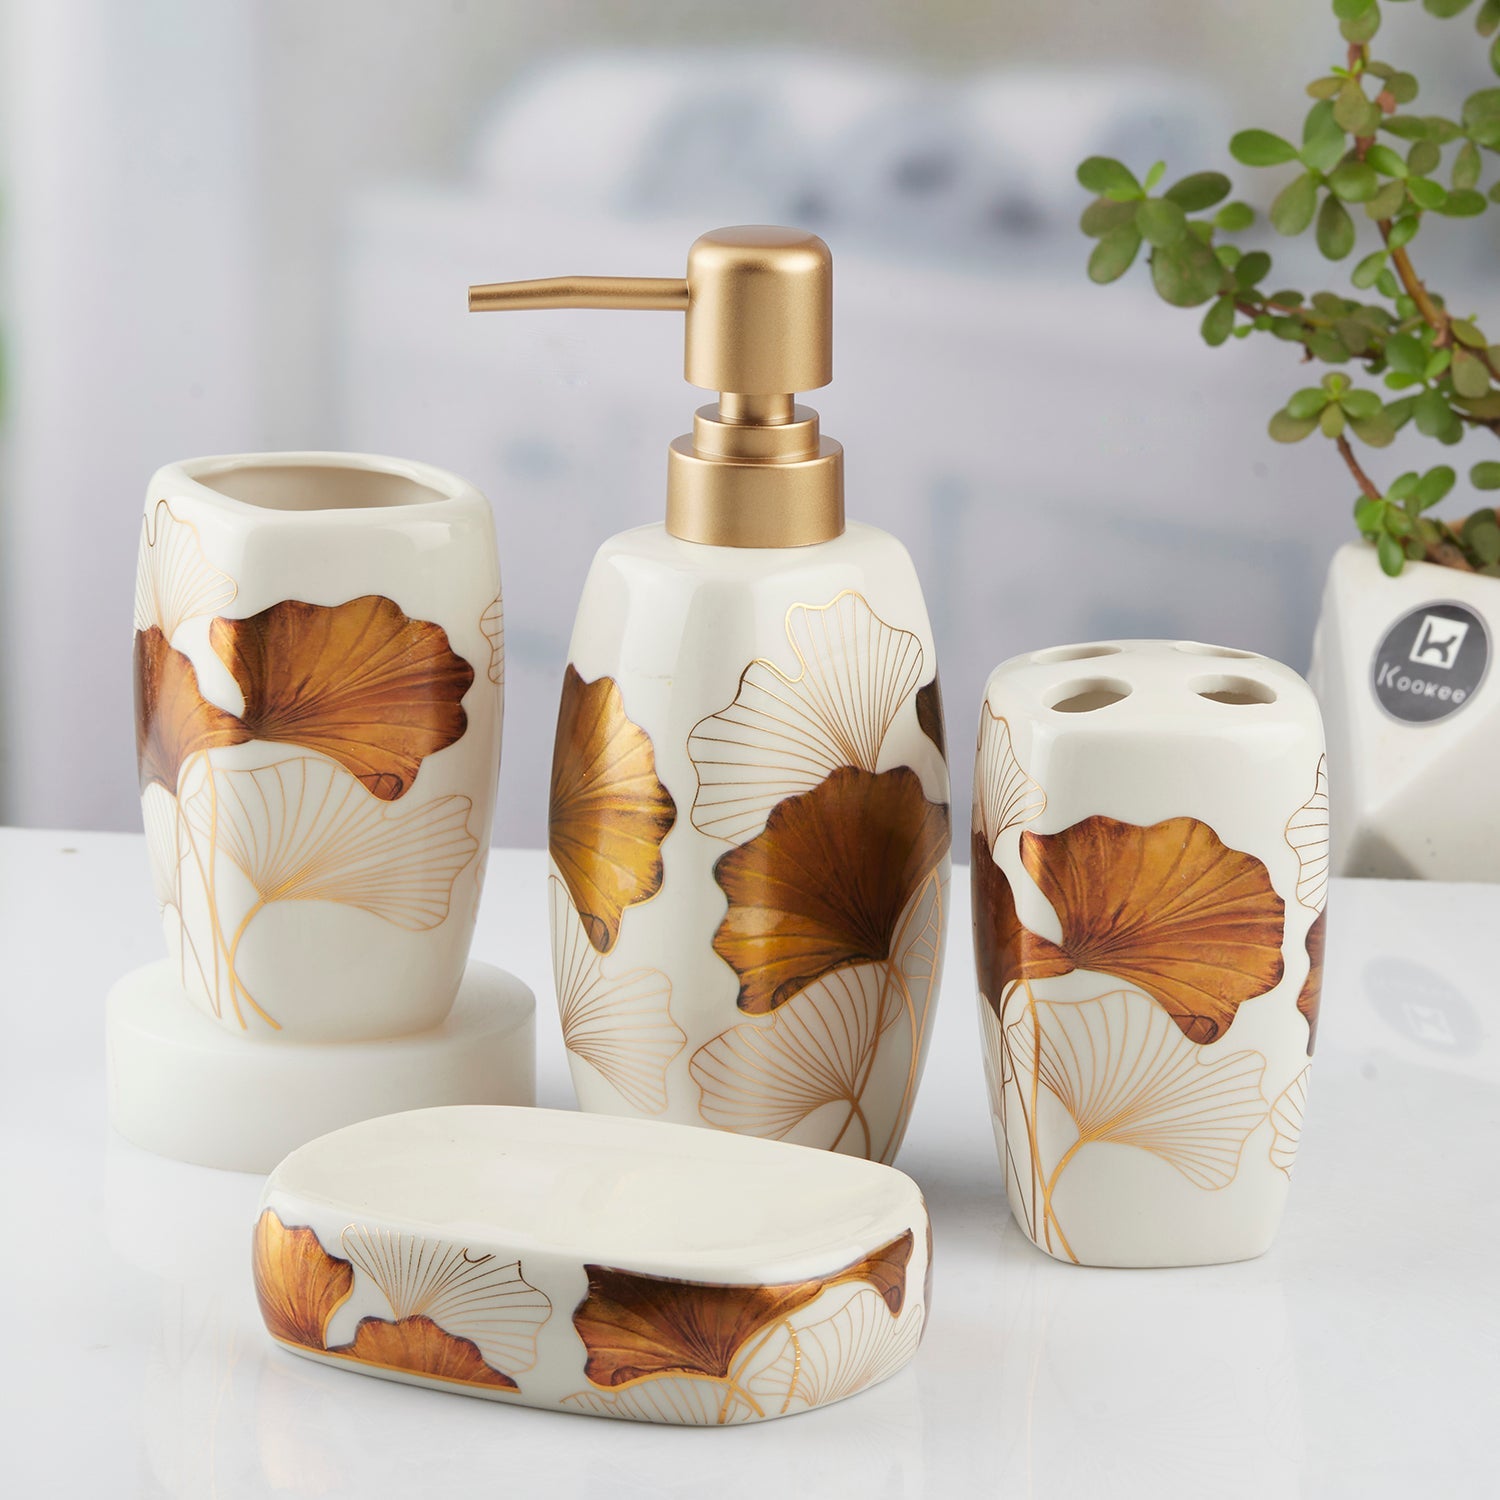 Ceramic Bathroom Set of 4 with Soap Dispenser (10397)